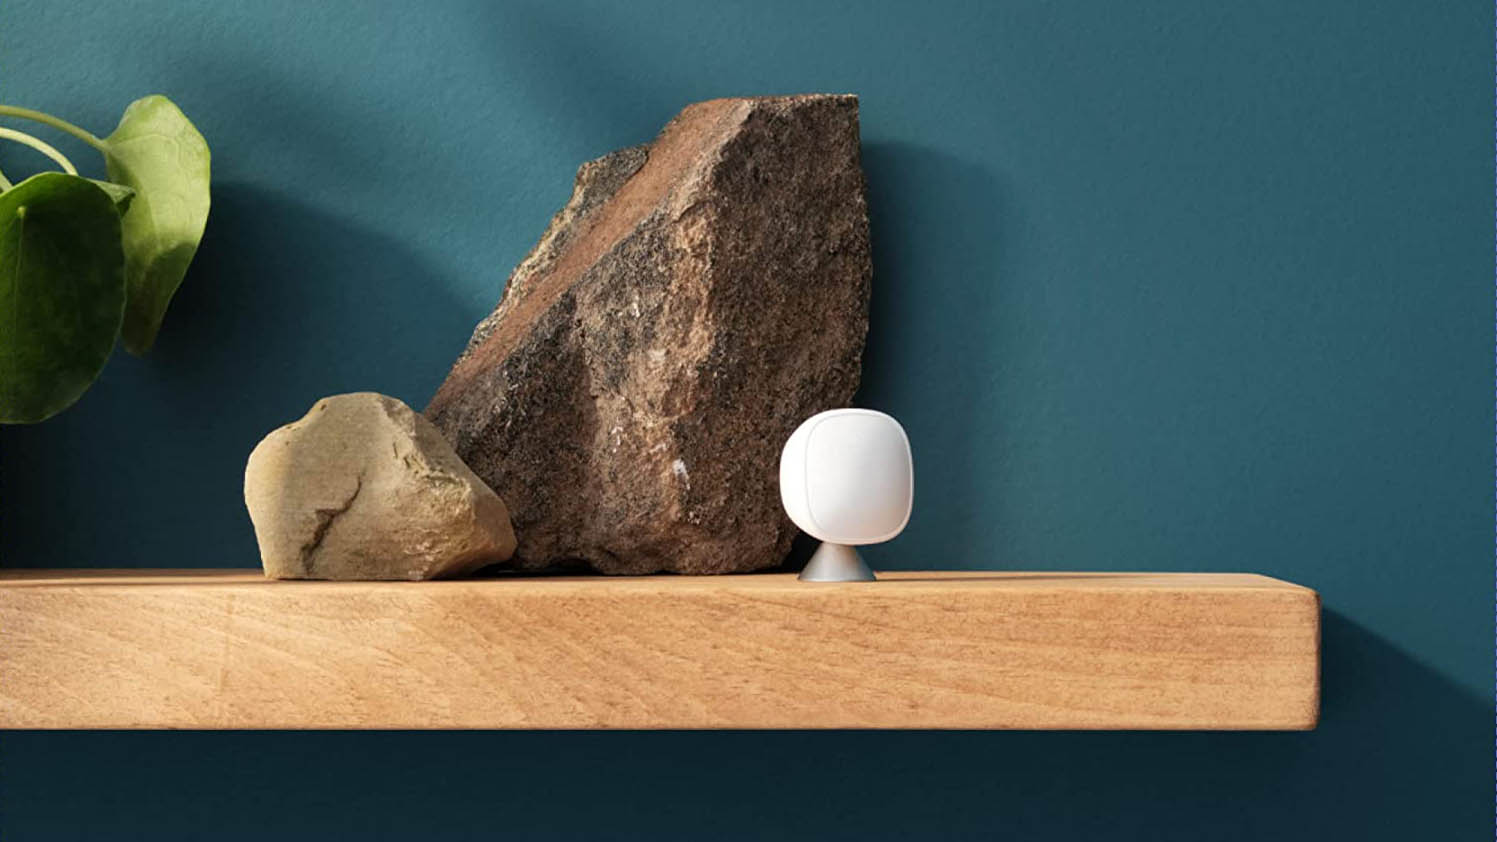 Ecobee smart sensor on a shelf next to two decorative rocks and a plant